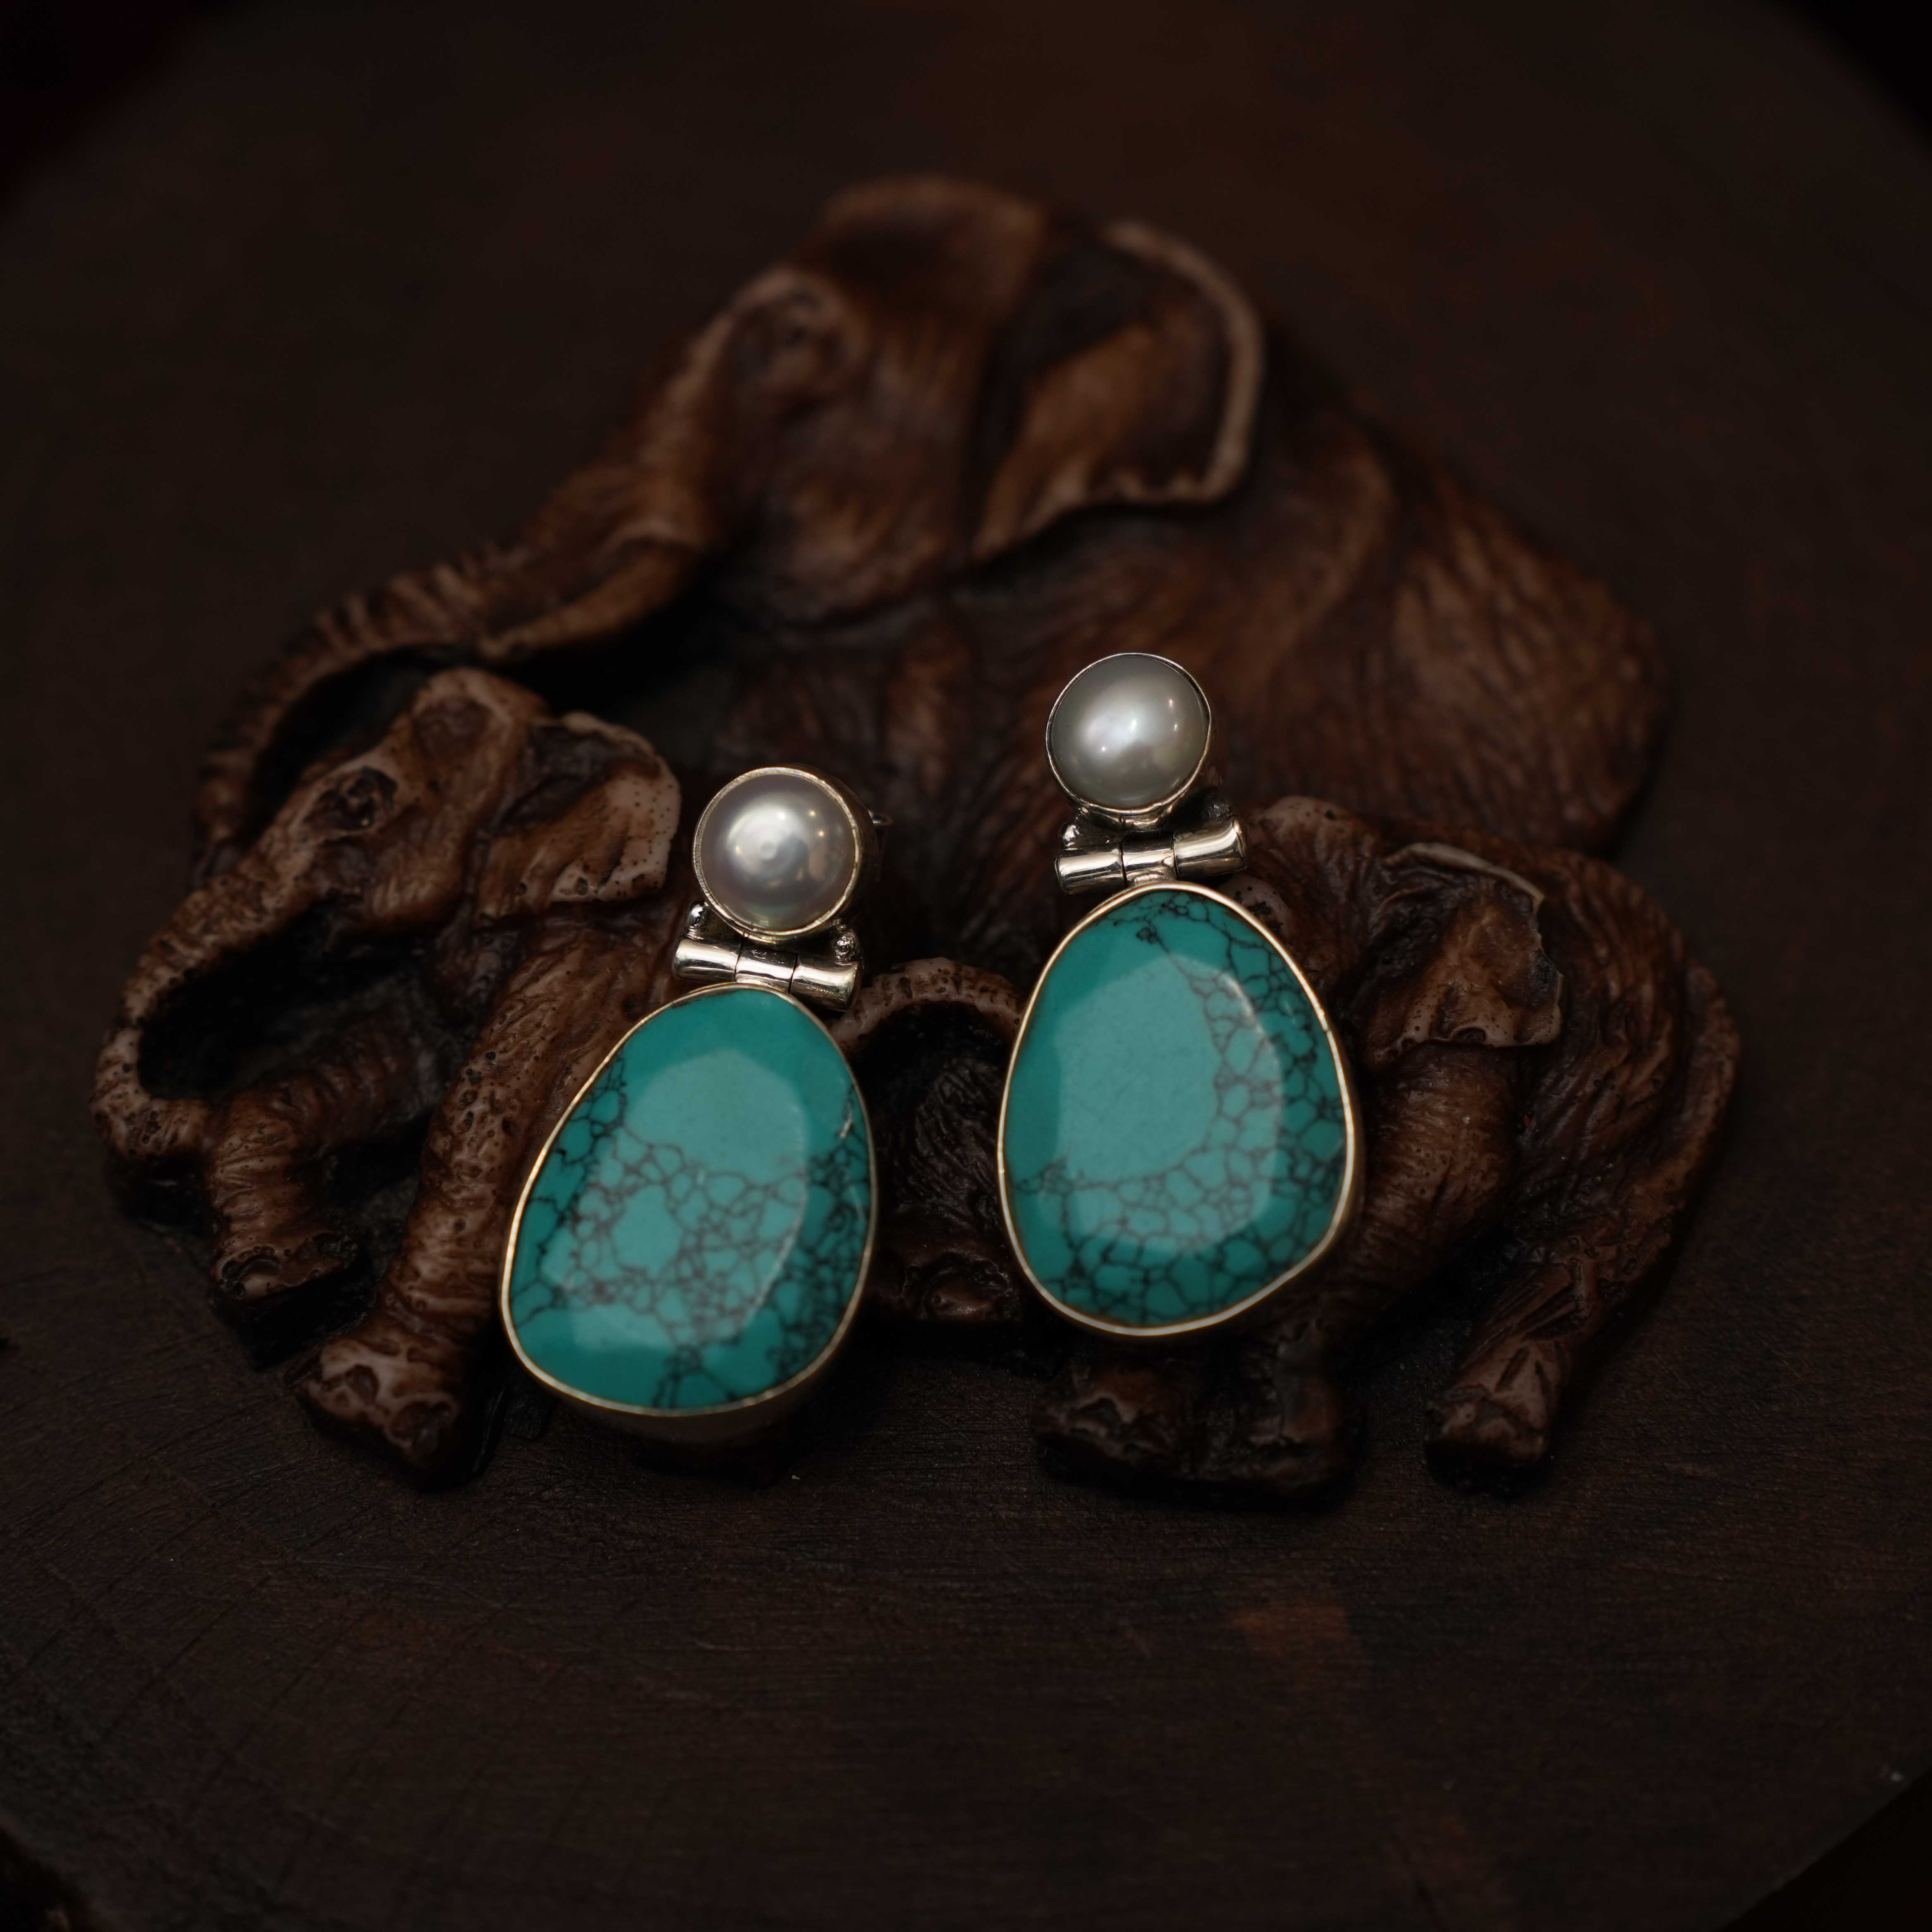 Rushmitha 925 Oxidized Silver Earrings - Turquoise